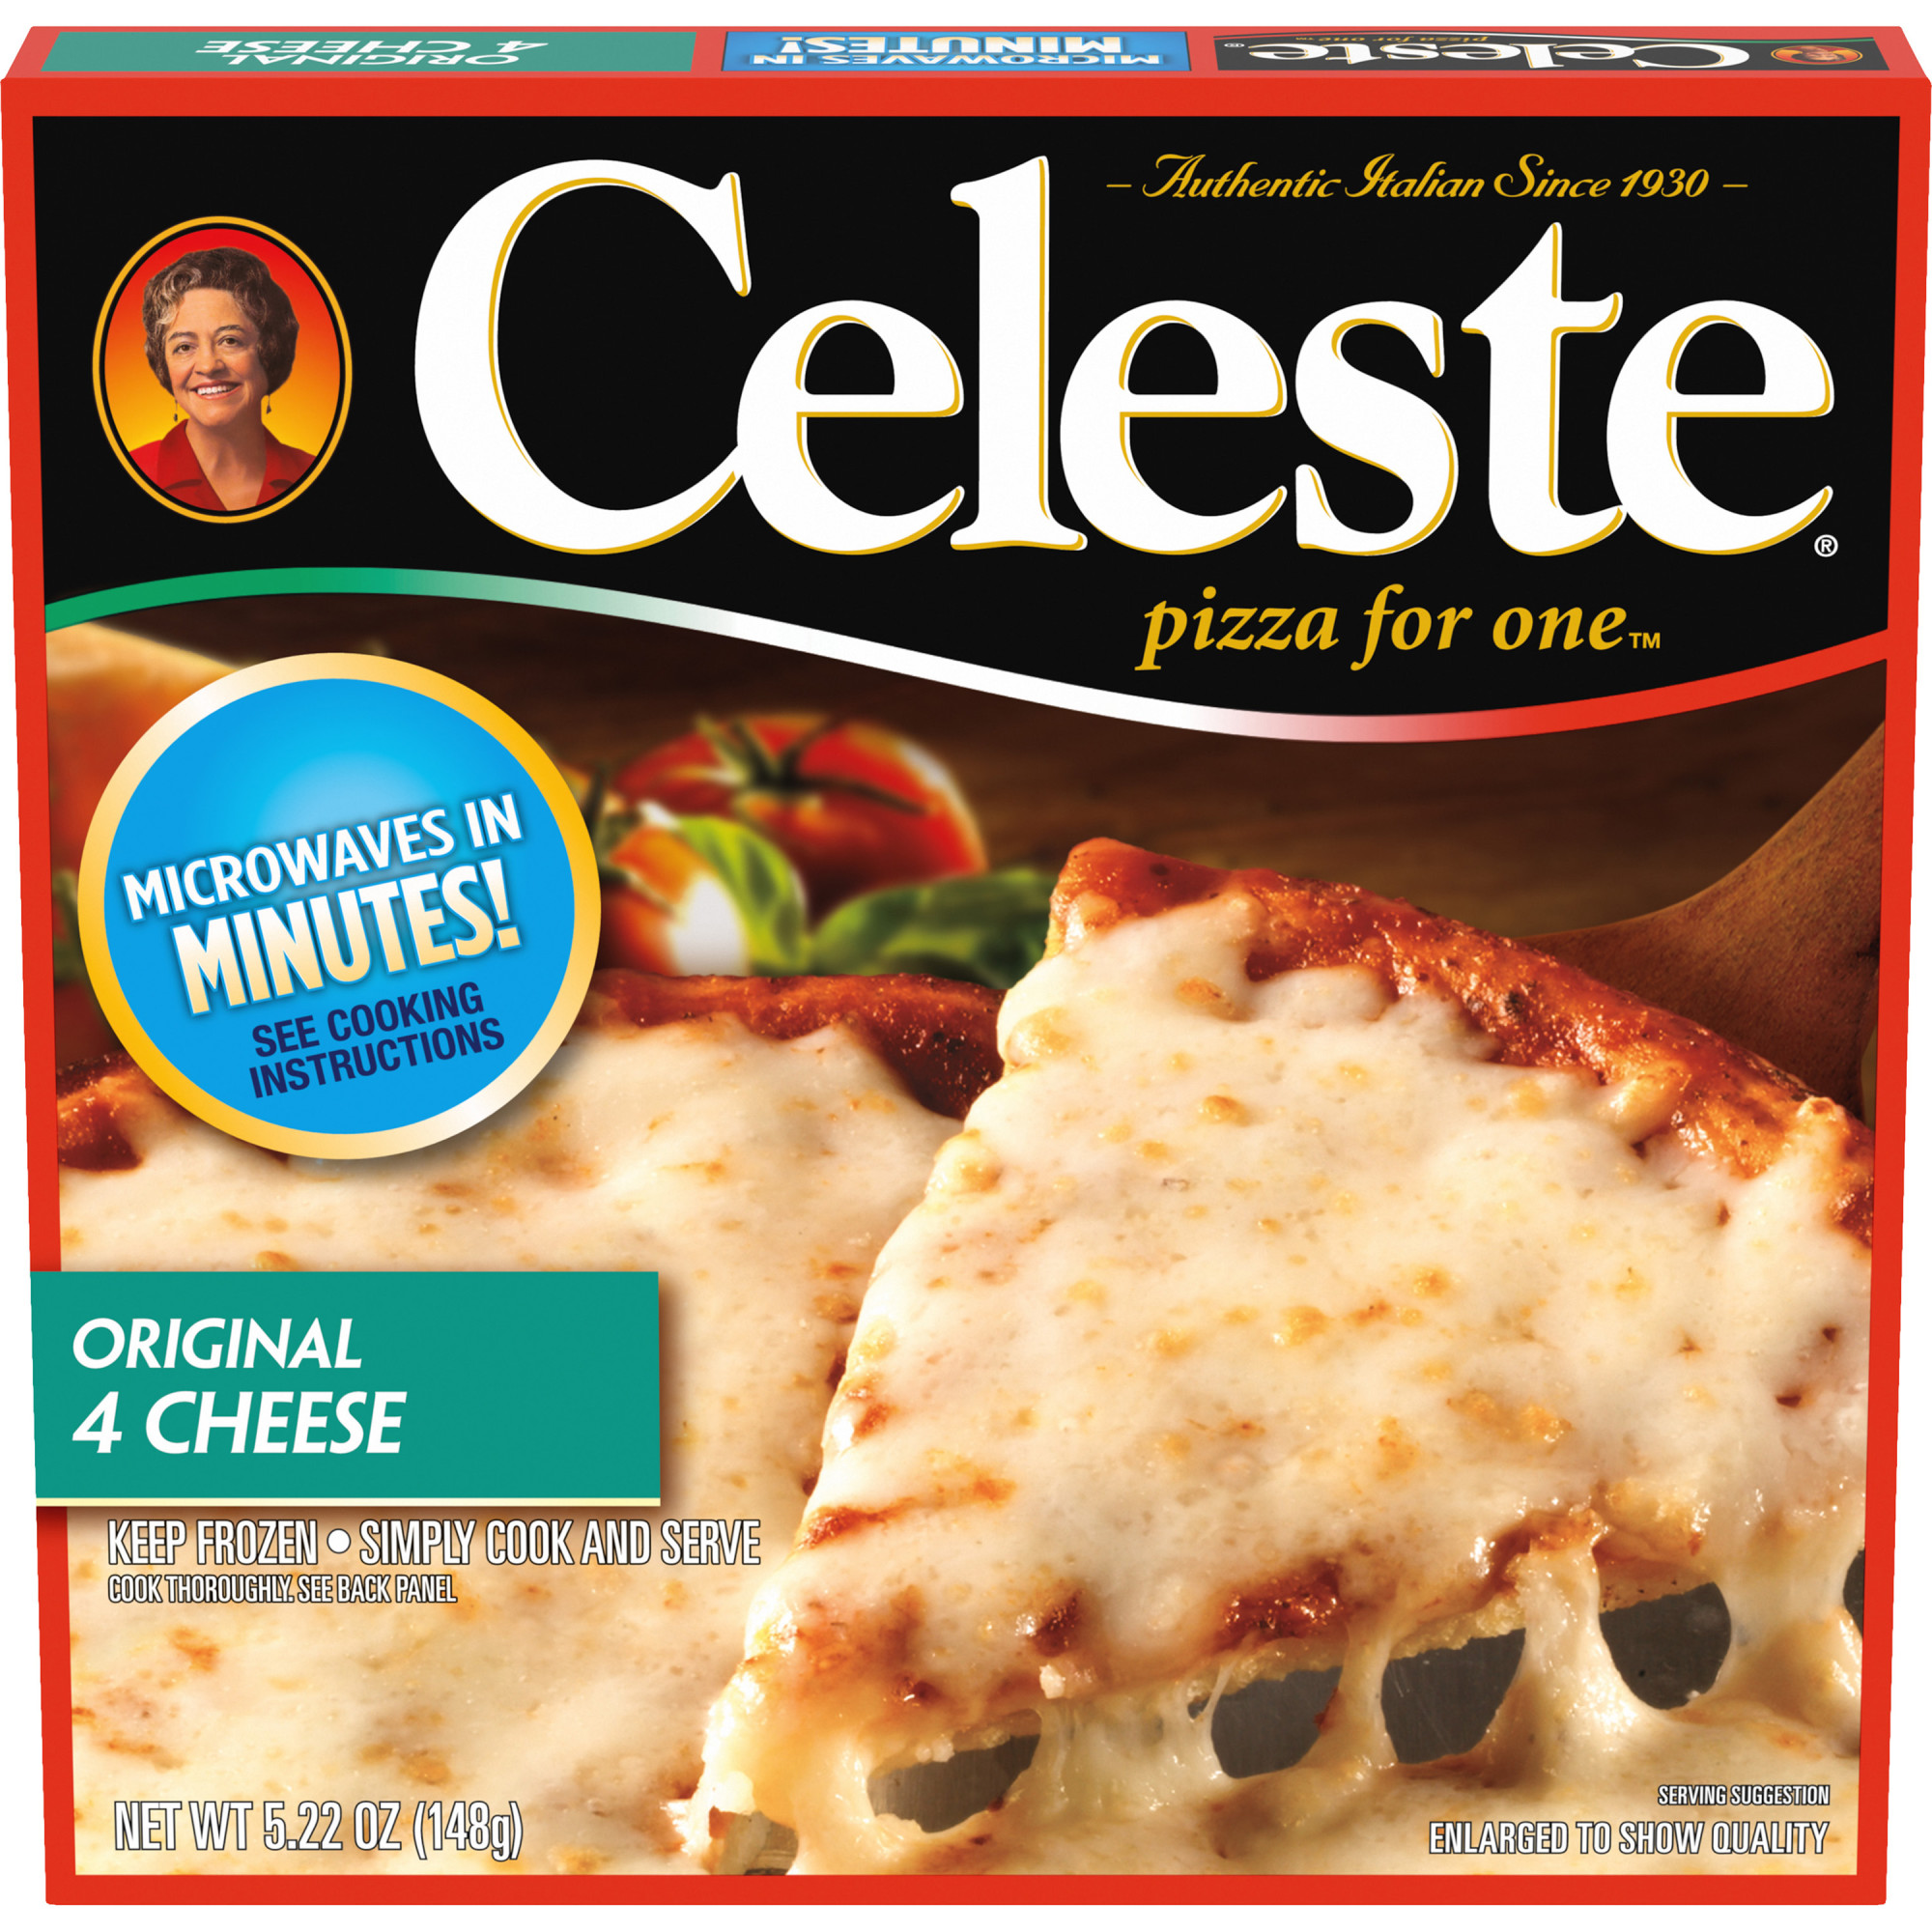 Celeste Original 4 Cheese Microwavable Frozen Pizza, 5.22 oz (Frozen) - image 1 of 6